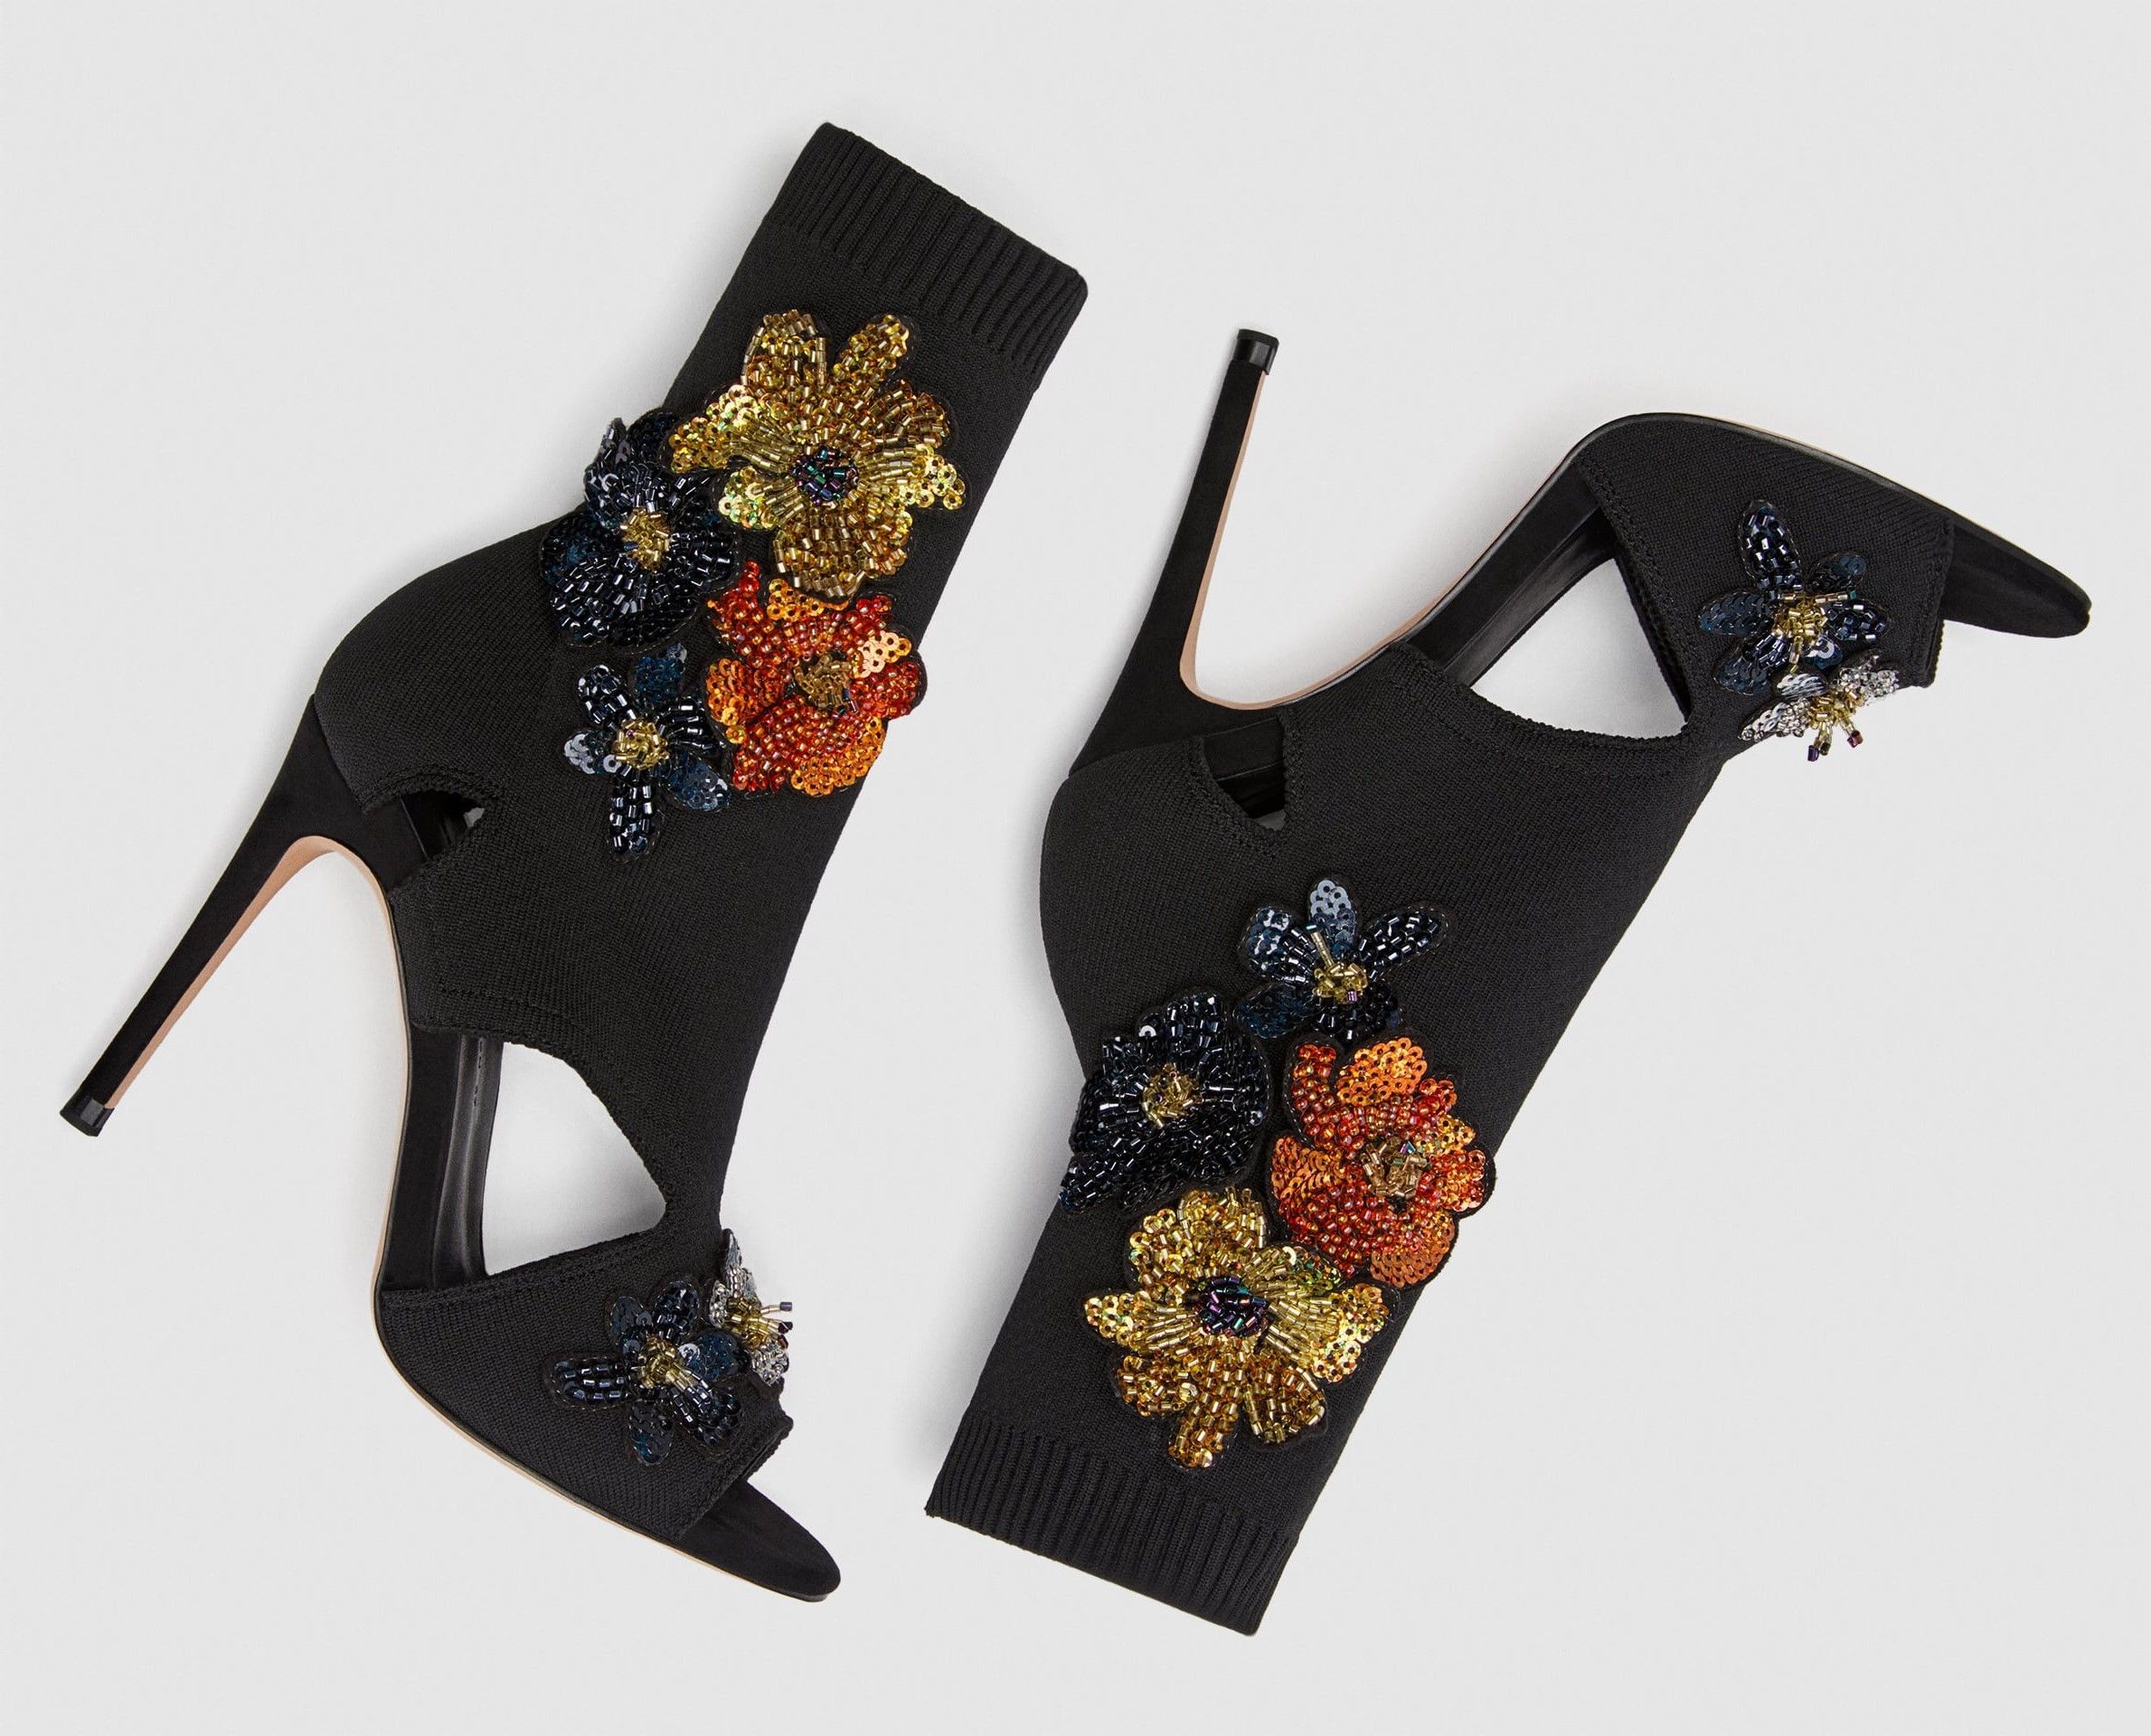 Sandali a fiori Zara tendenze scarpe primavera estate 2018